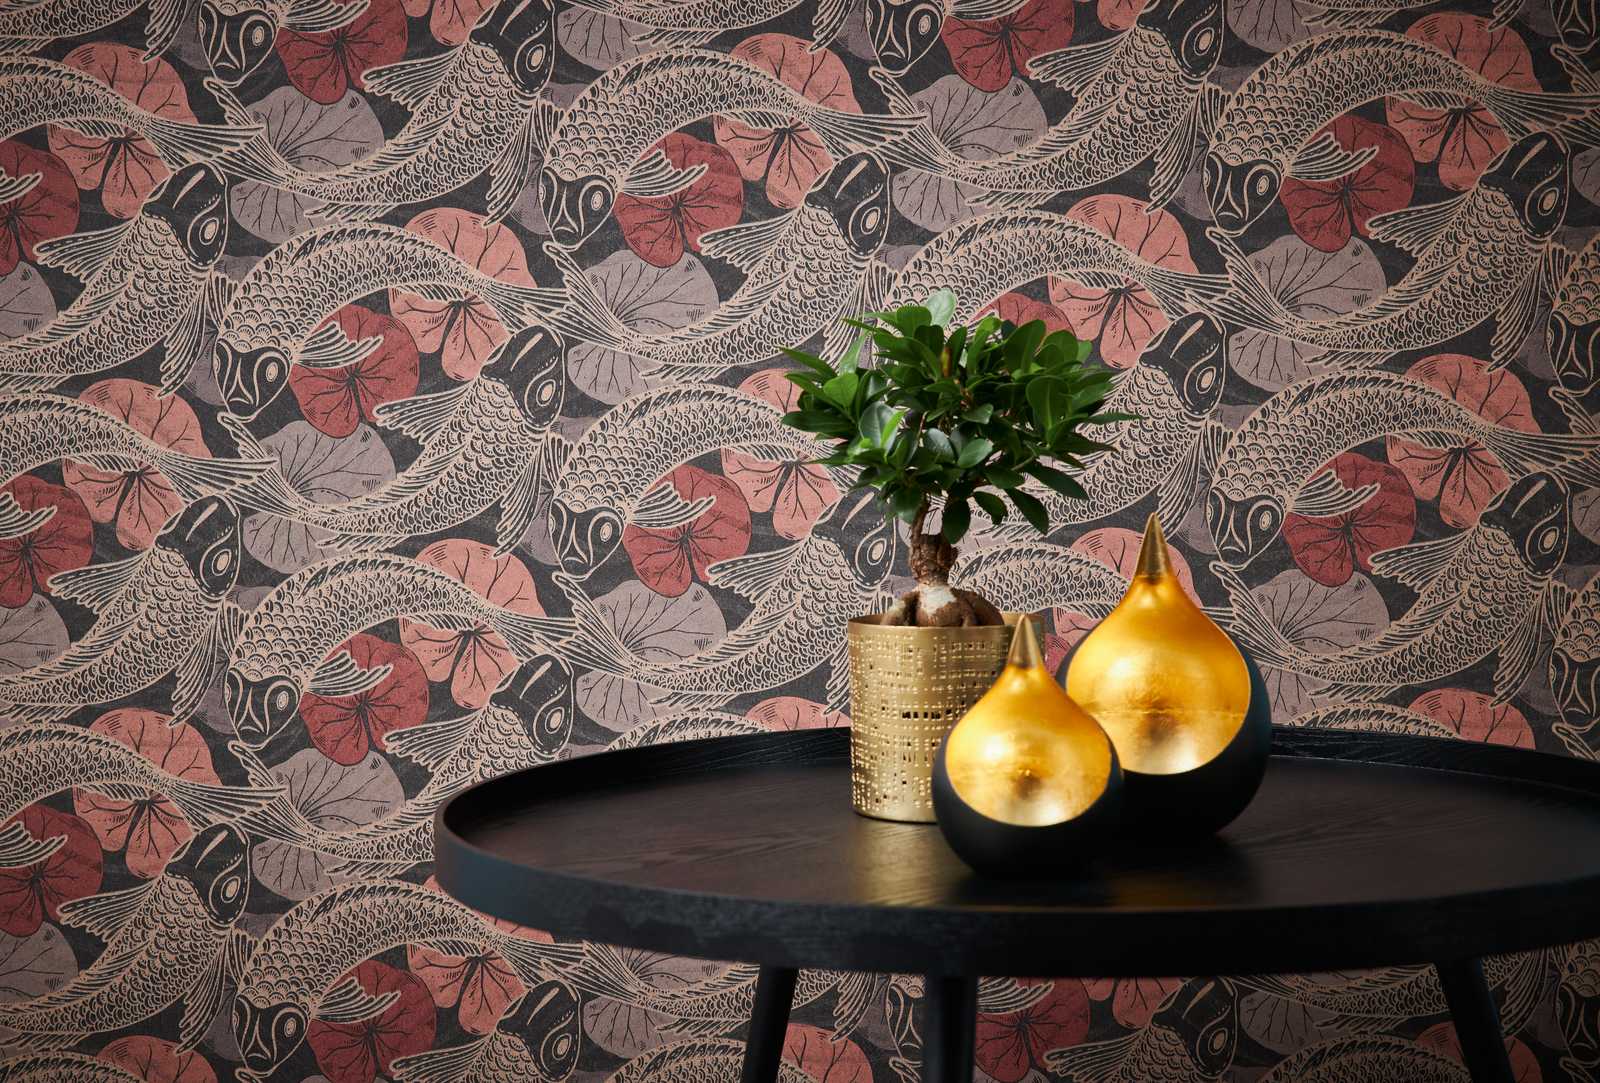             Pattern wallpaper koi motif with metallic accents - brown, red, black
        